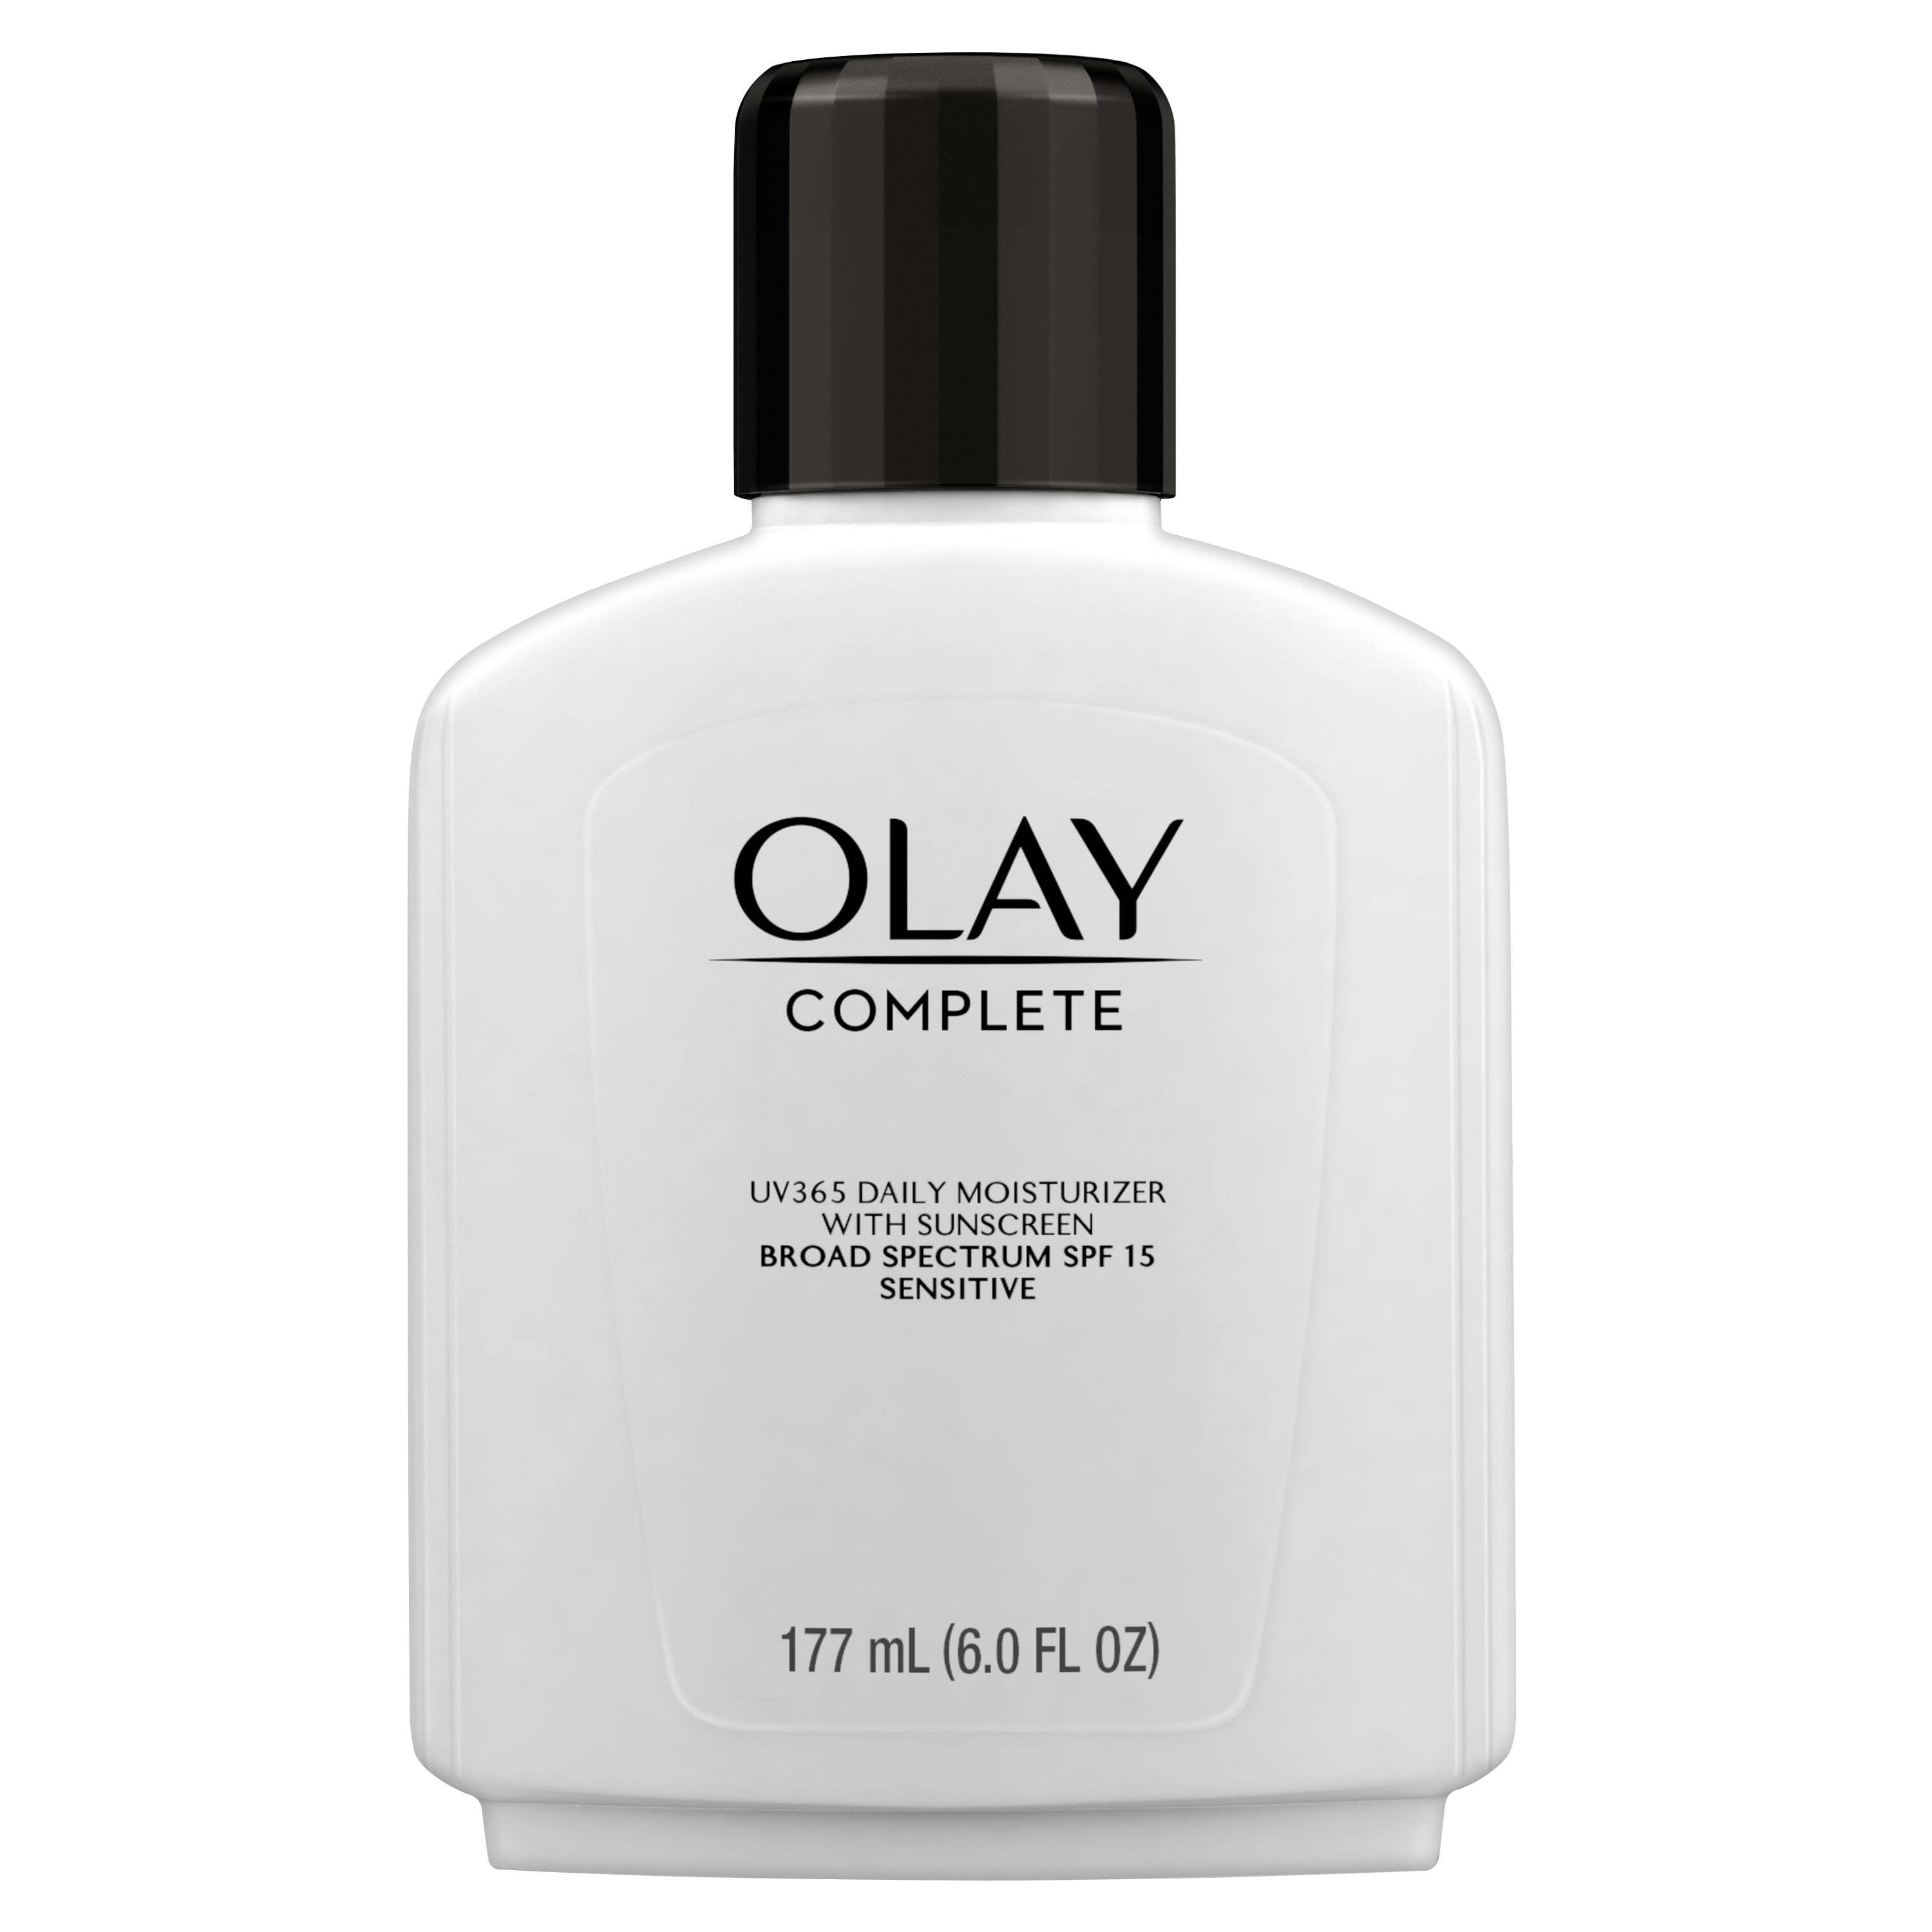 Olay Complete Daily Moisturizer for Sensitive Skin, SPF 15, 6 fl oz | MTTS313